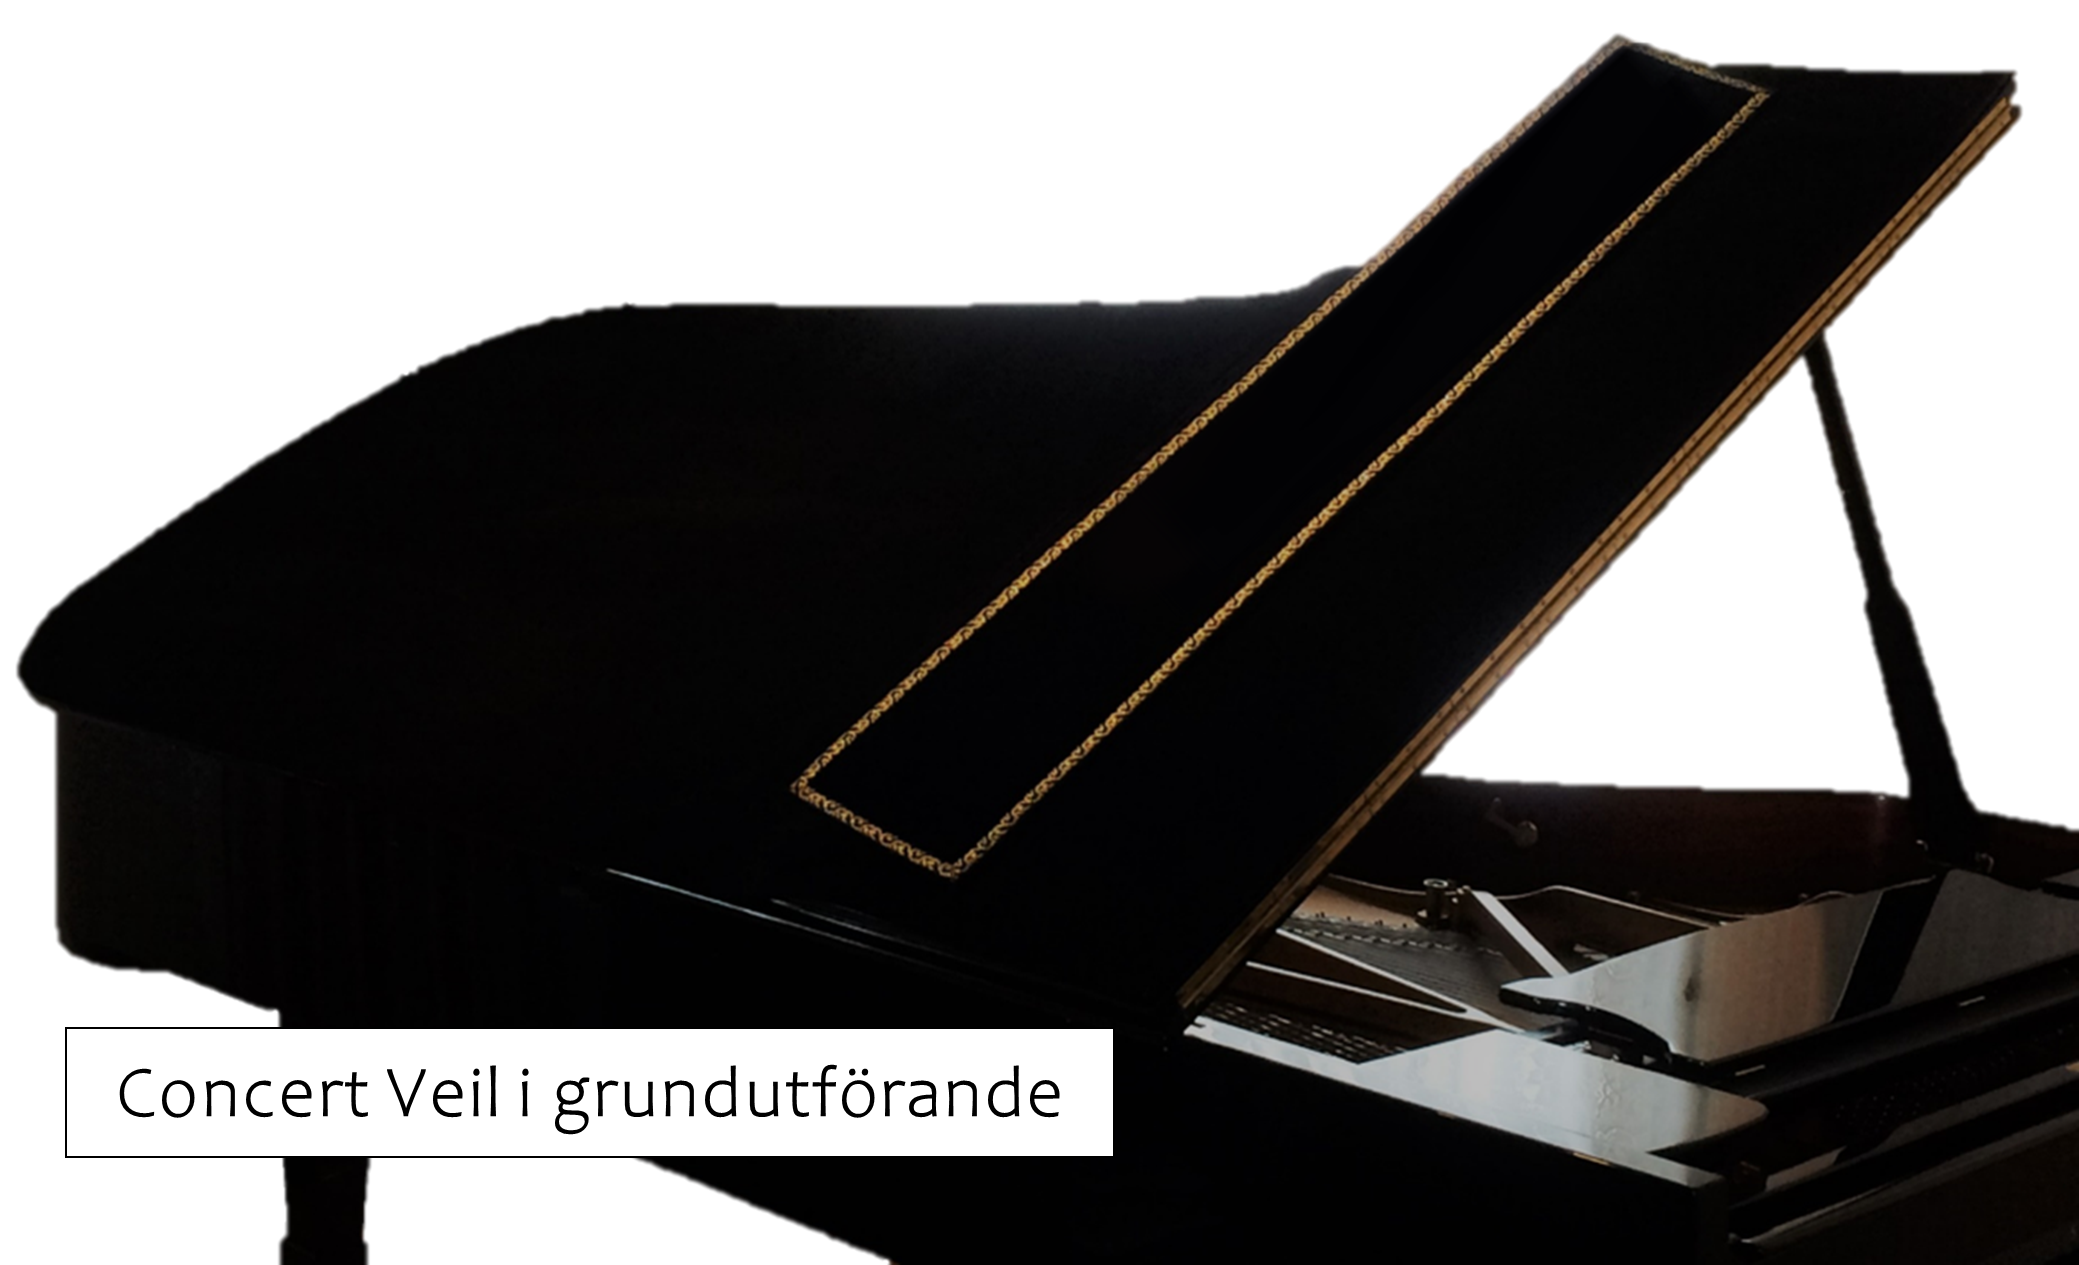 Irritating light reflections grand piano lid